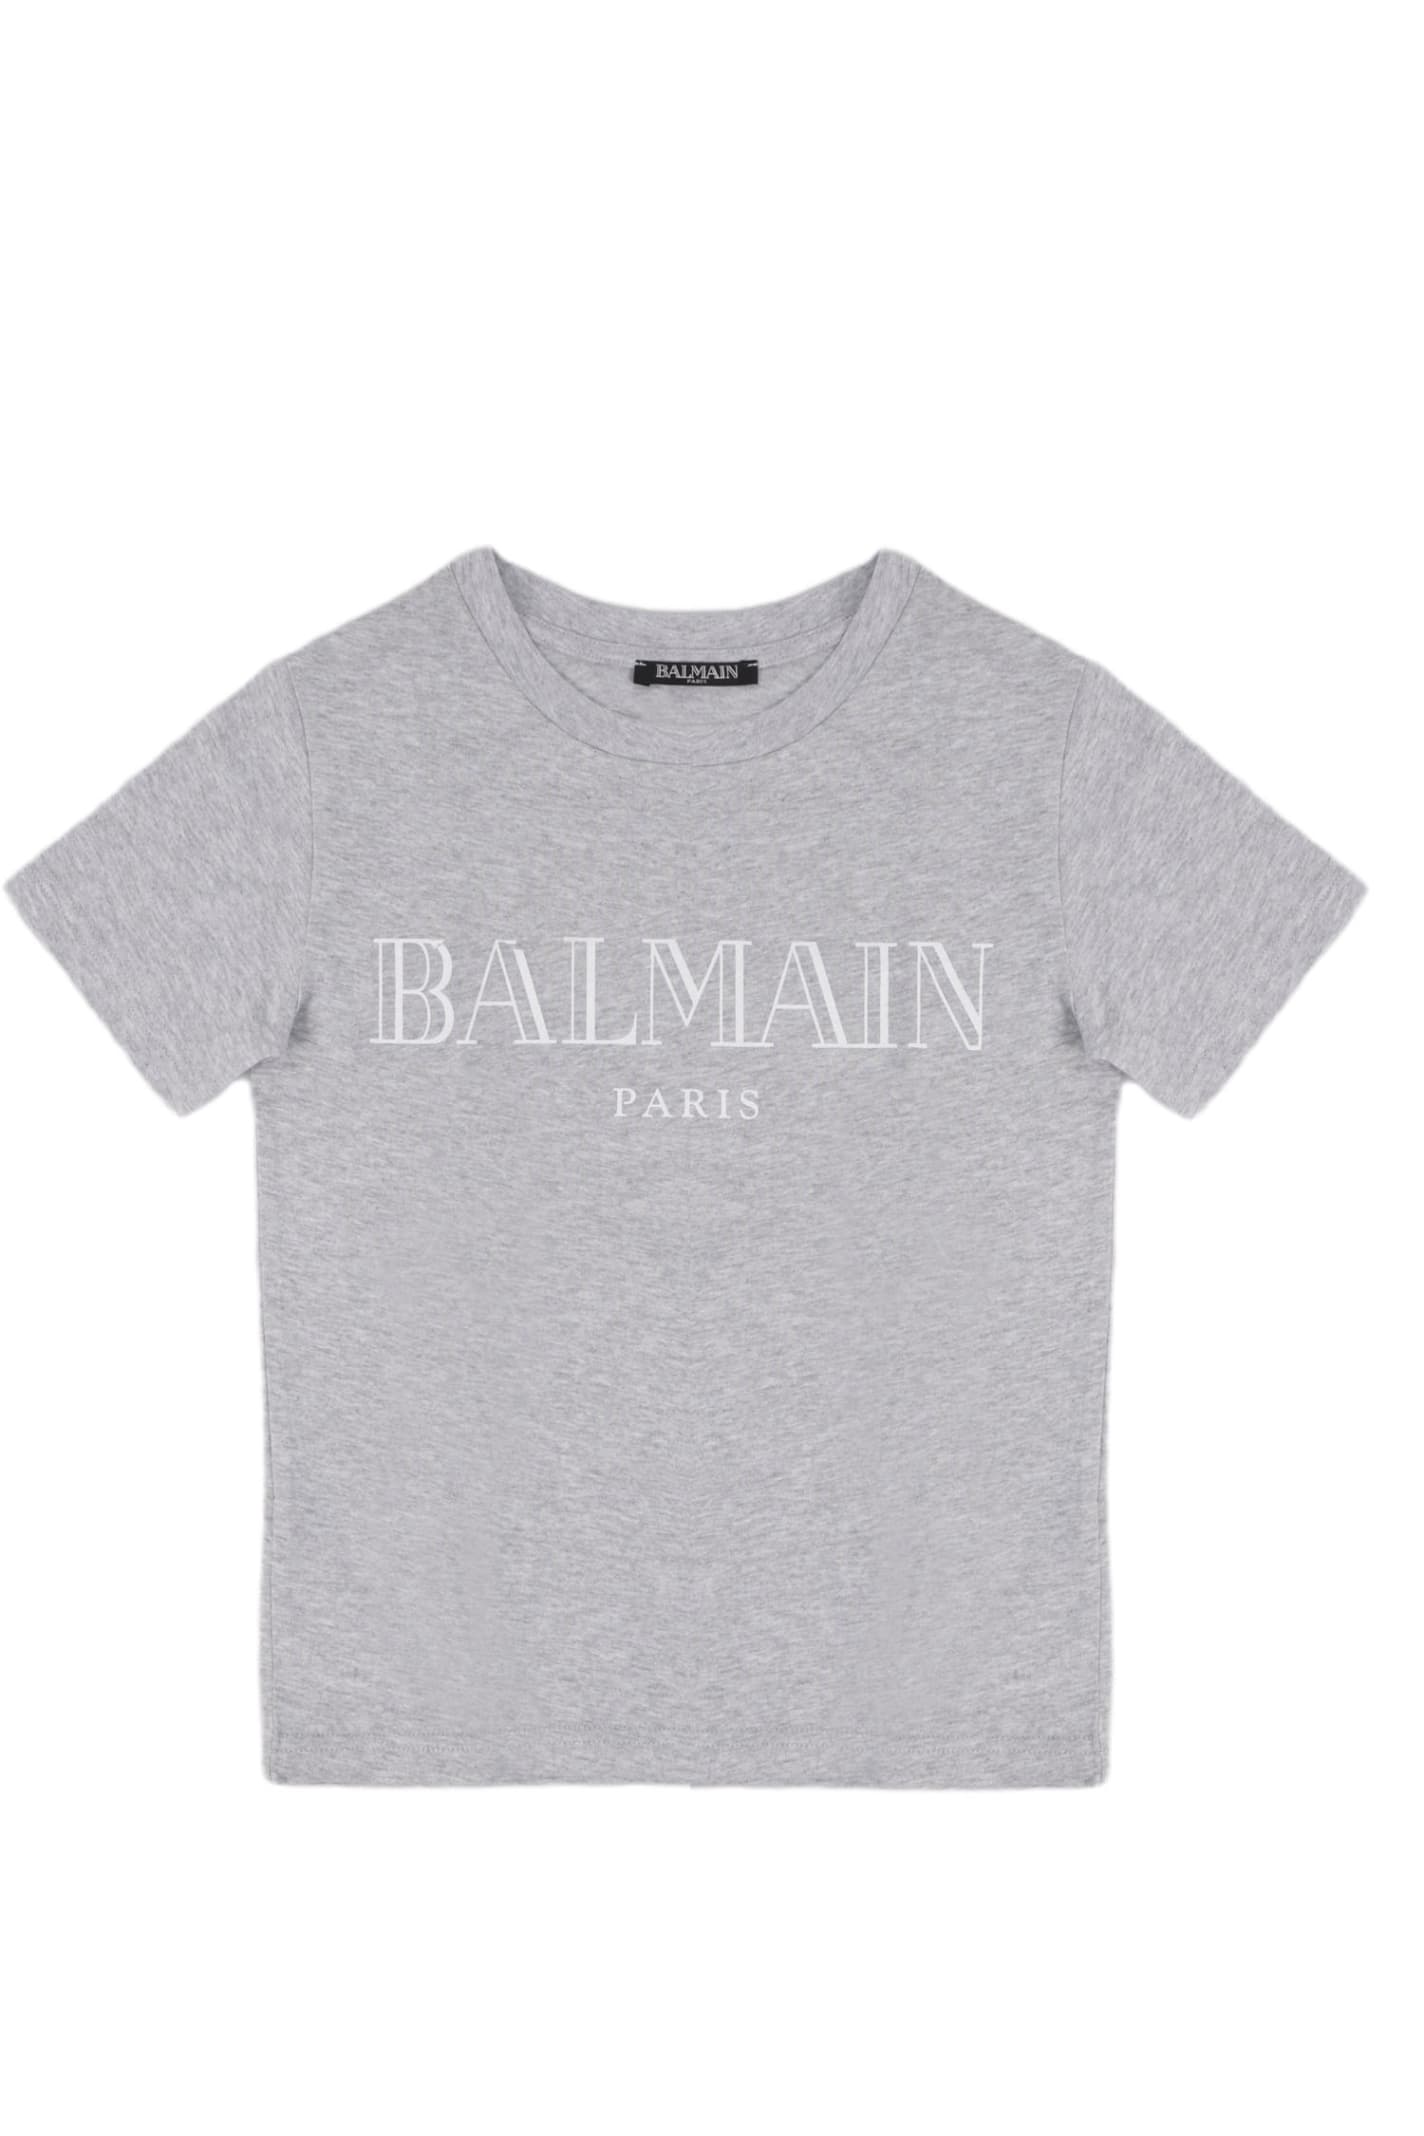 Balmain Kids' Cotton T-shirt In Grey